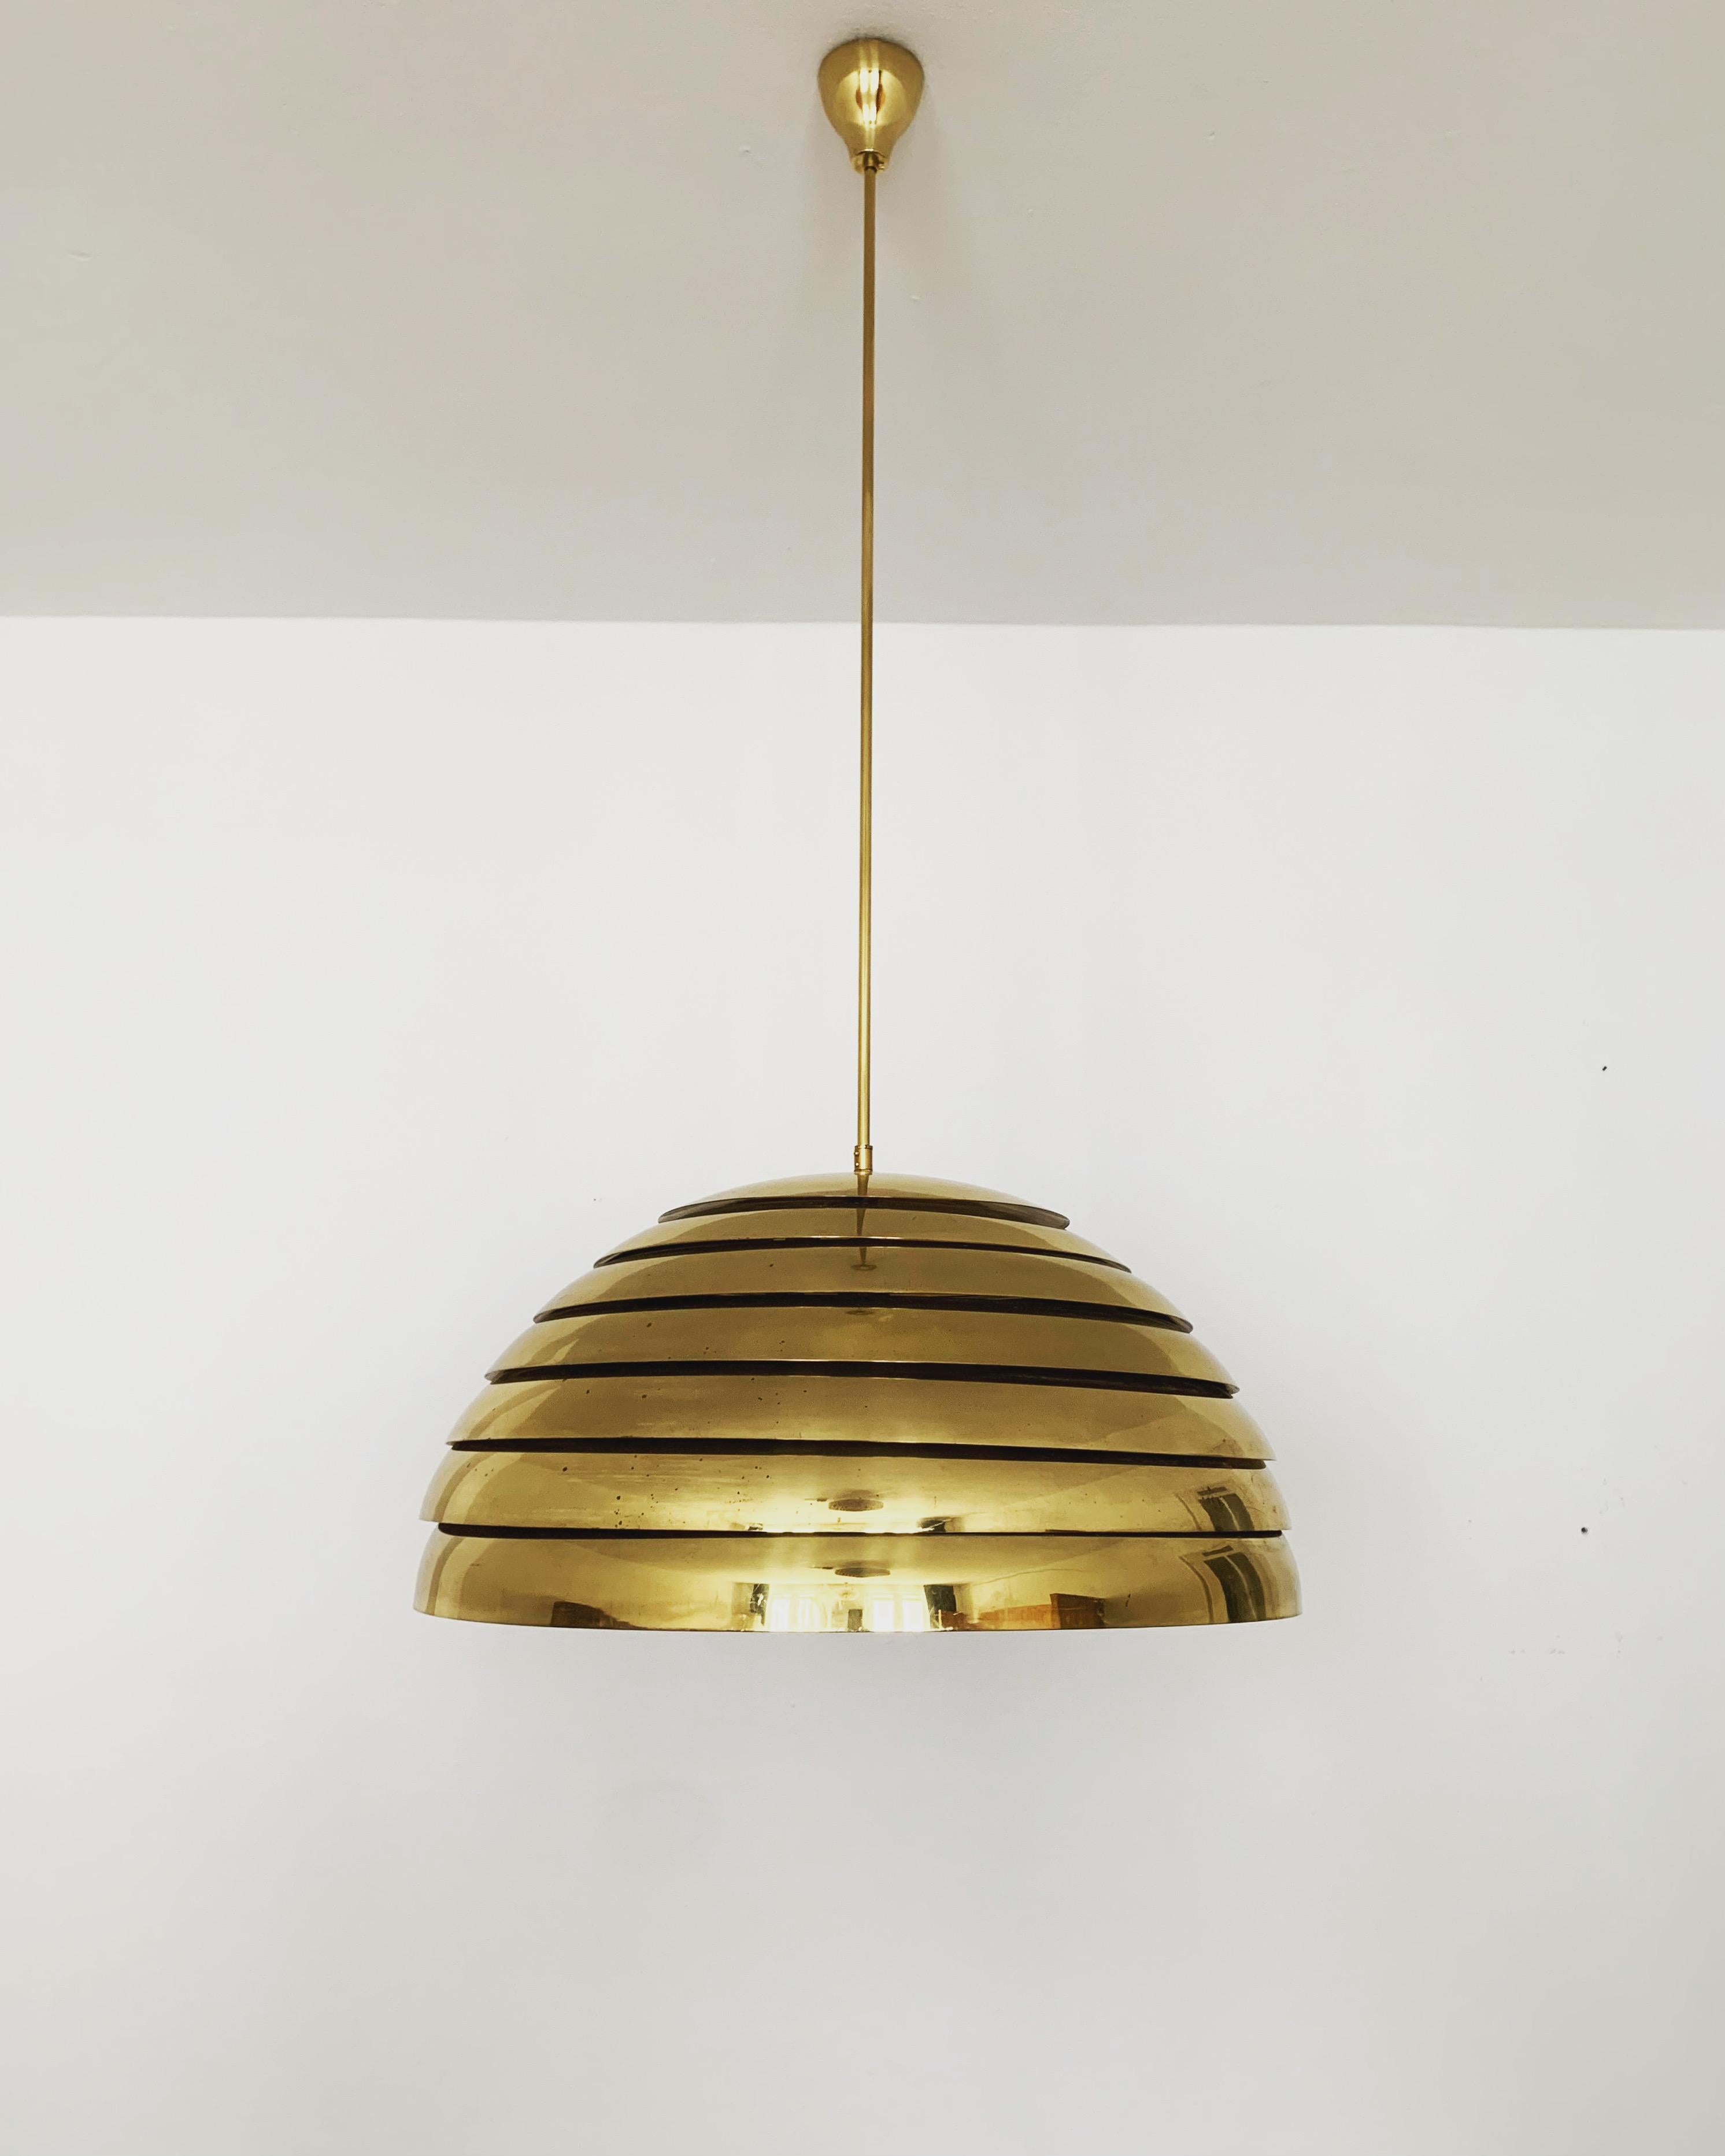 Pendant Lamp by Vereinigte Werkstätten Collection In Good Condition For Sale In München, DE